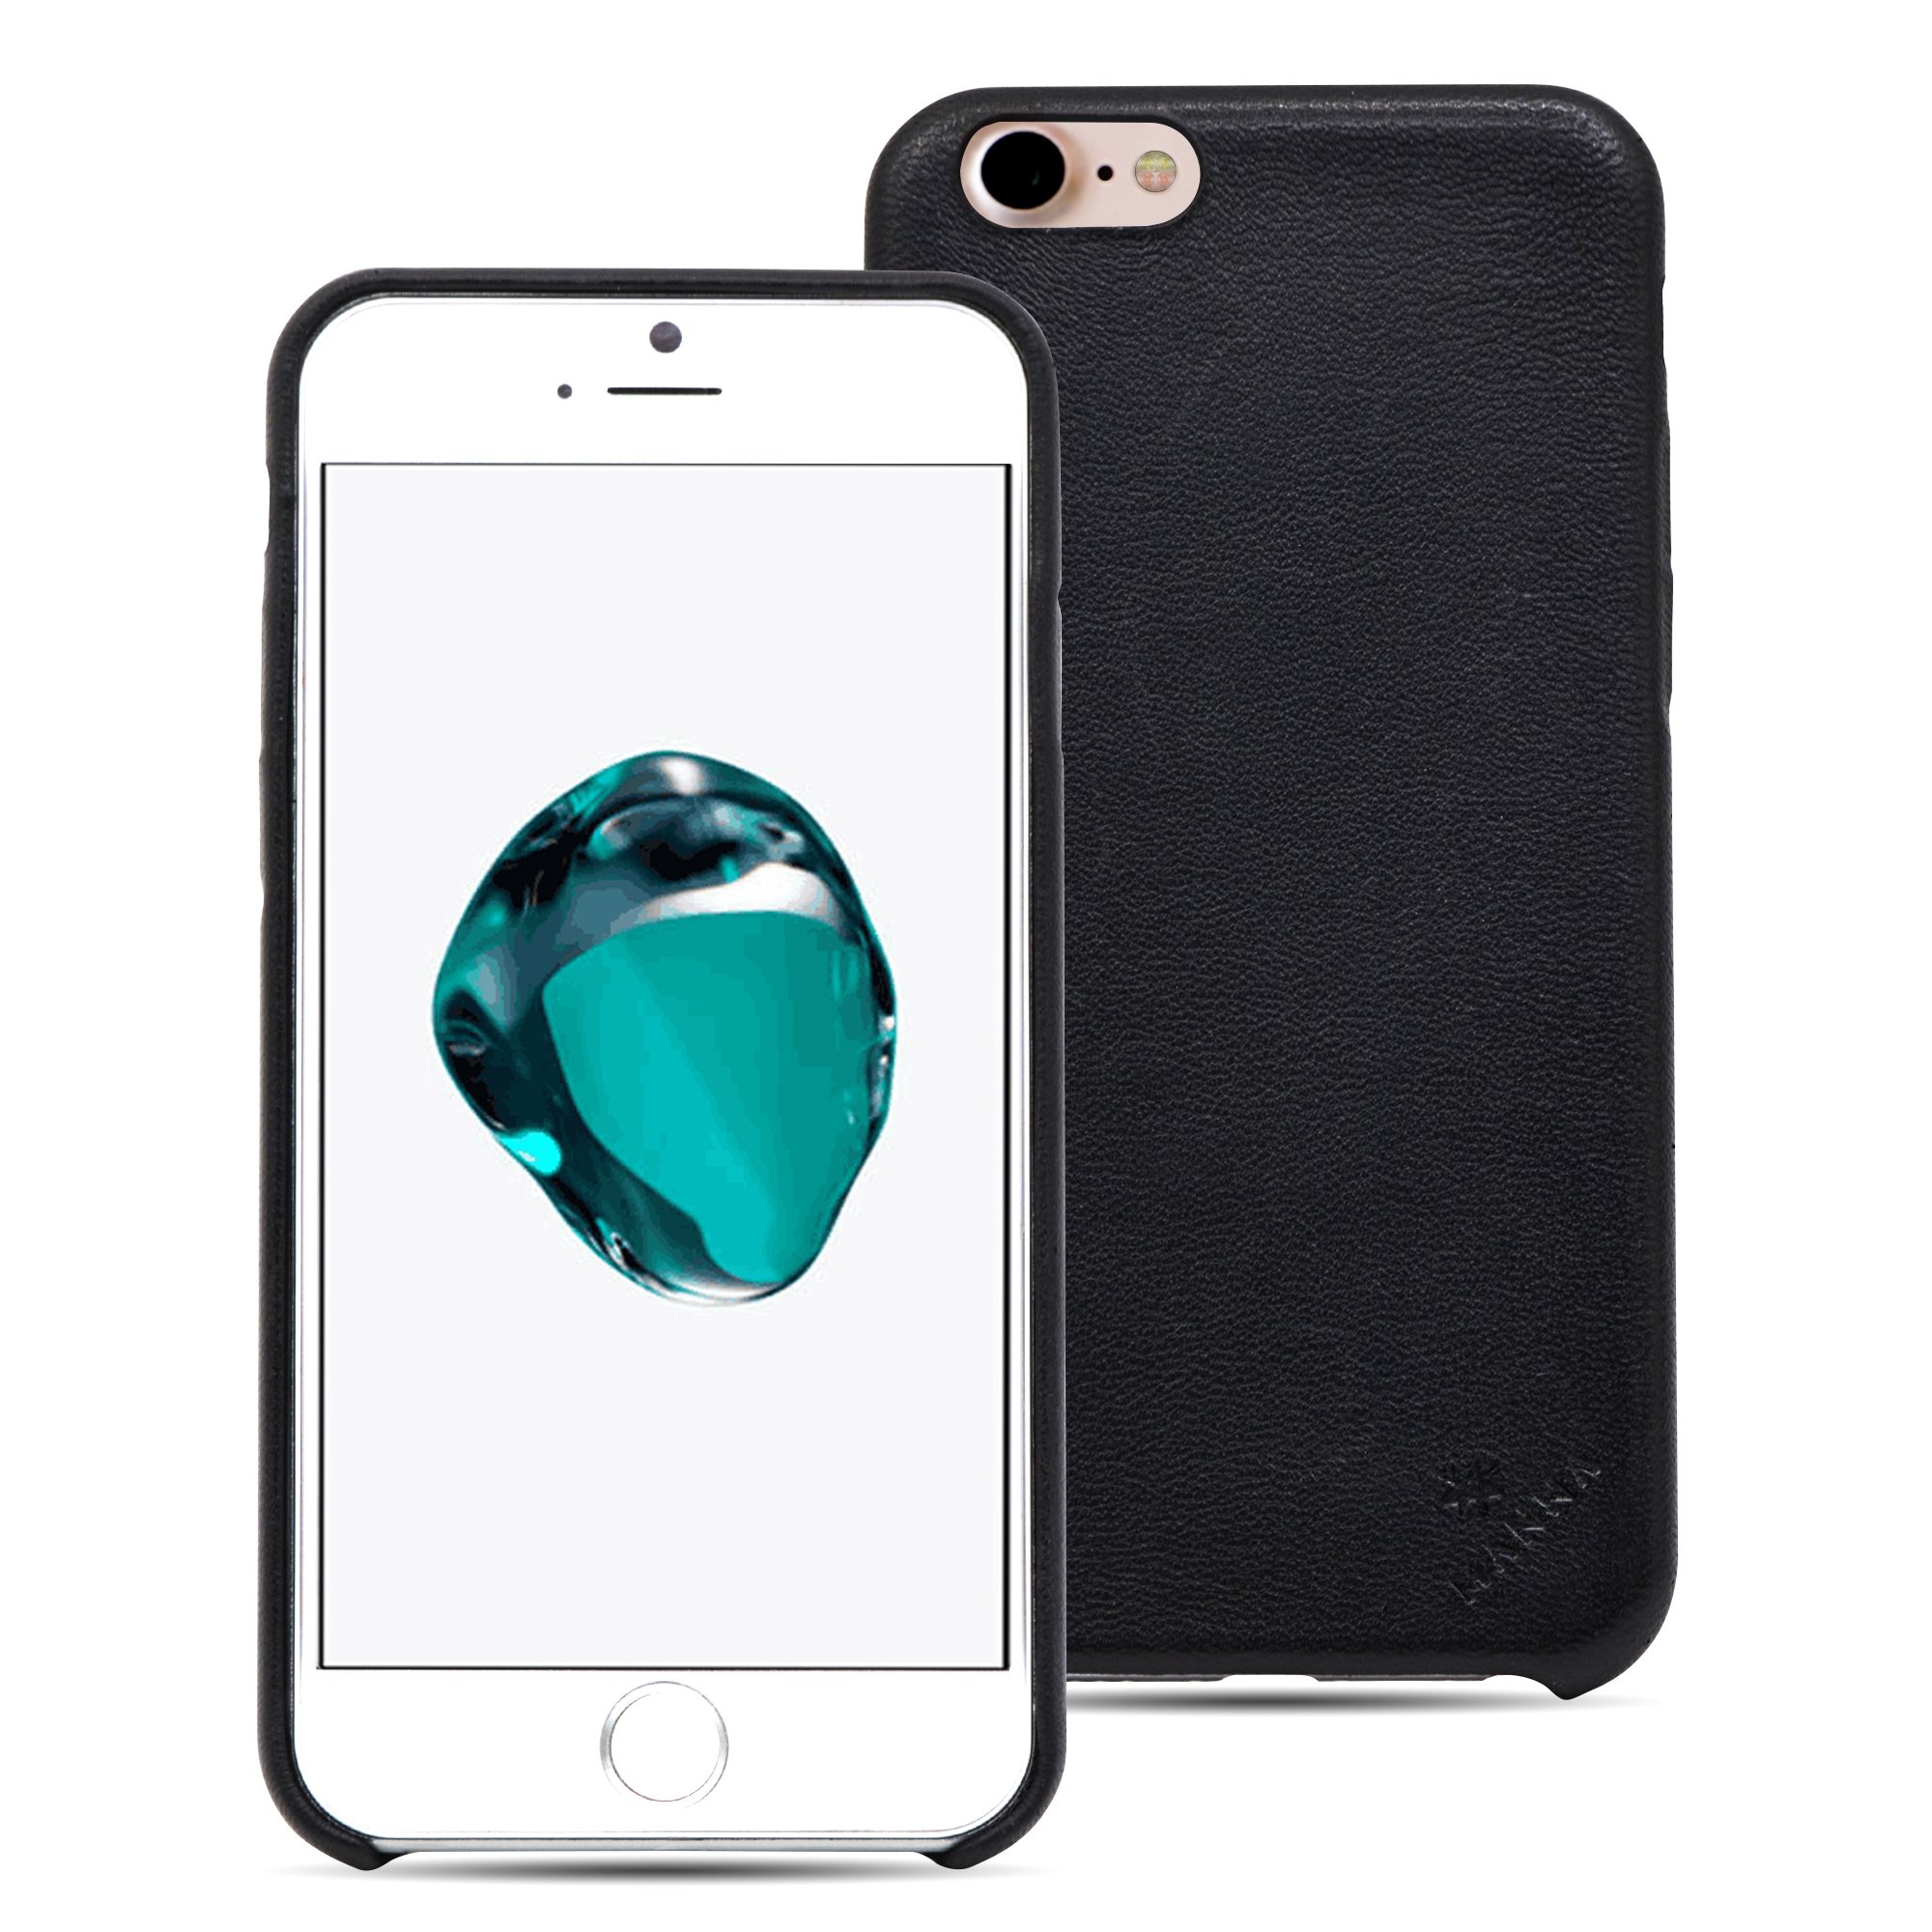 Manna Rückcover für Apple iPhone 7 Hülle | Lederhülle Abdeckung Tasche Handyhülle | Case aus Echtleder Dakota | für 4,7 Zoll Display